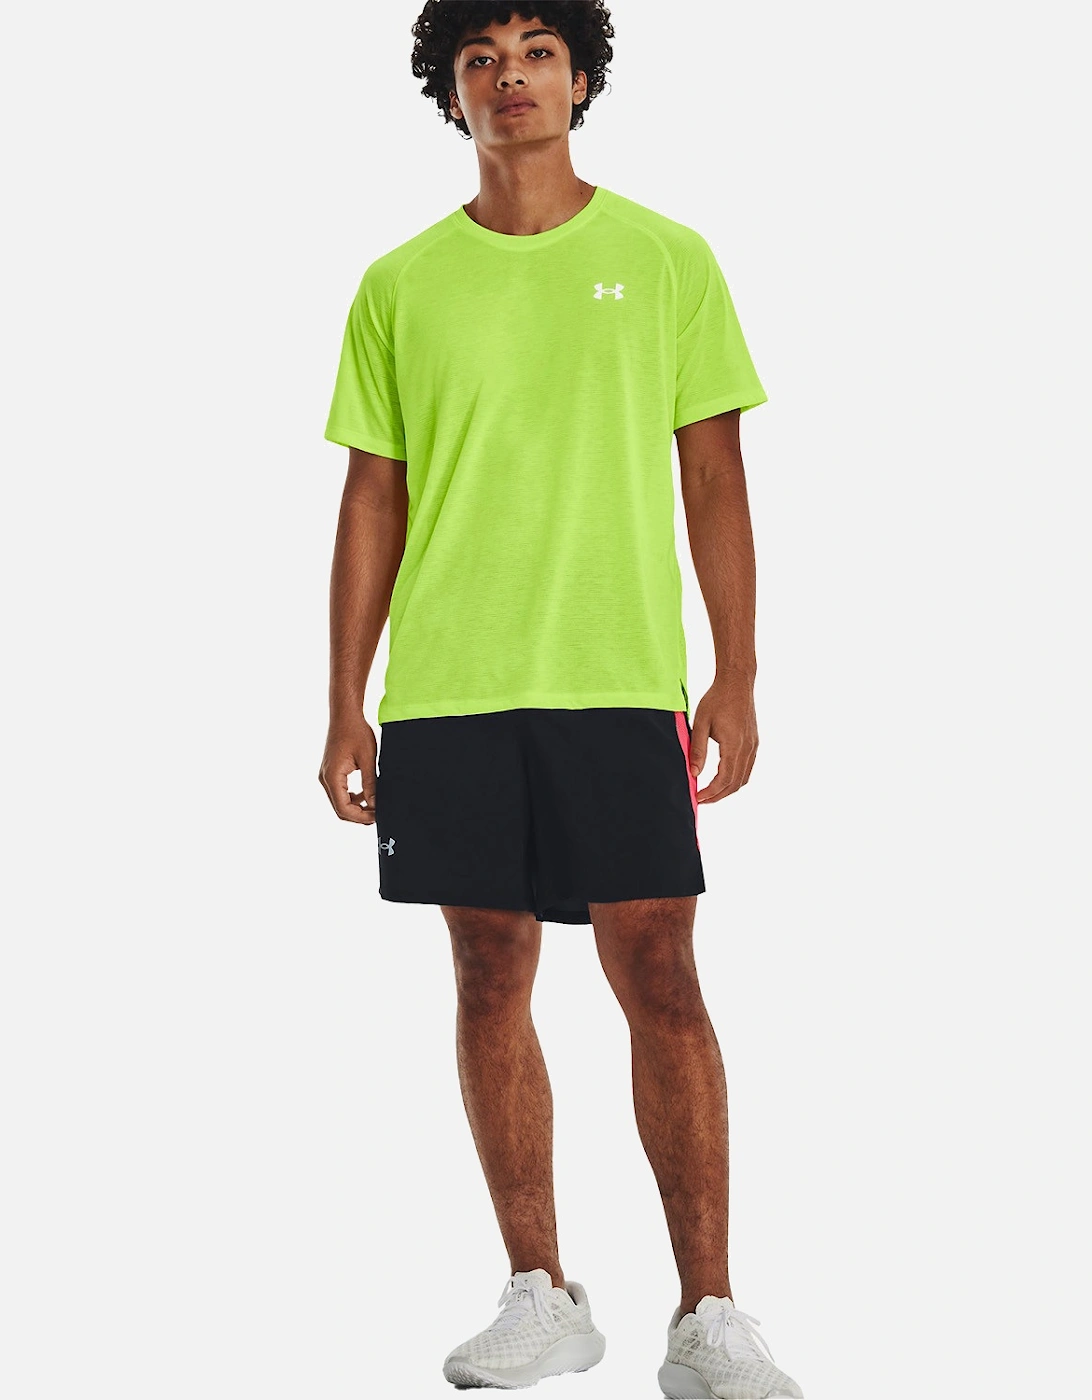 Mens Streaker Run T-Shirt (Lime)